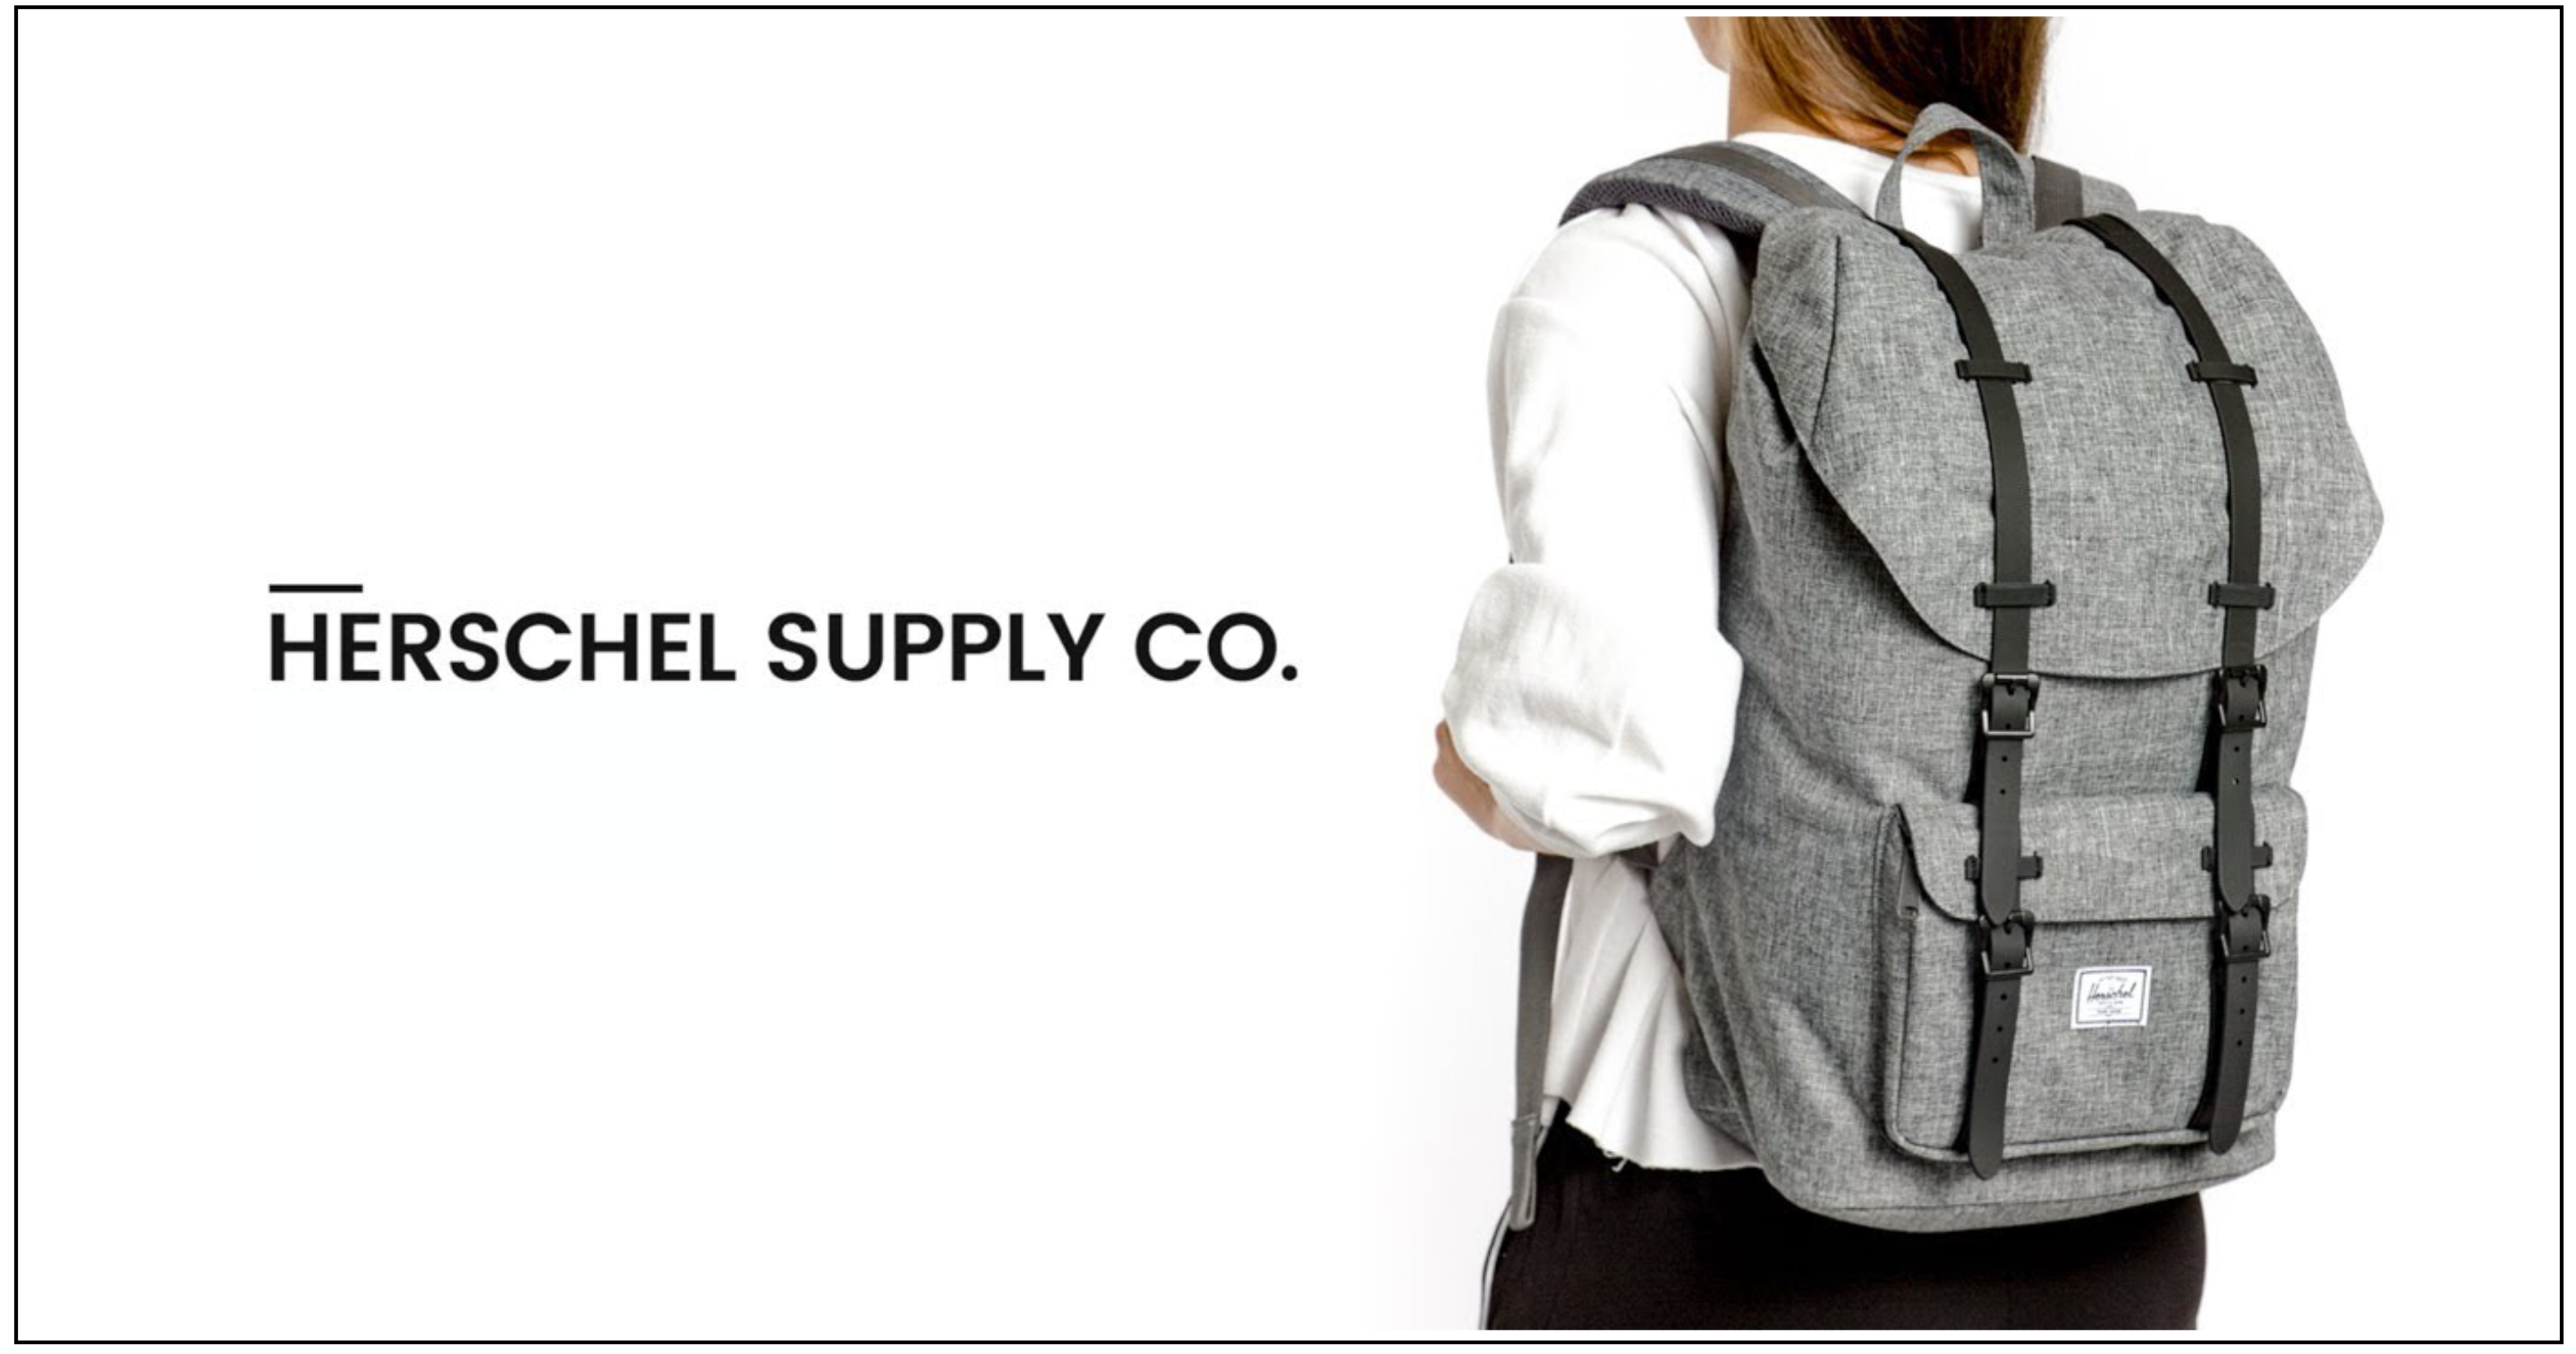 Herschel Supply Co Anchor Ipad Air Sleeve - Navy/Red - Bag Shop